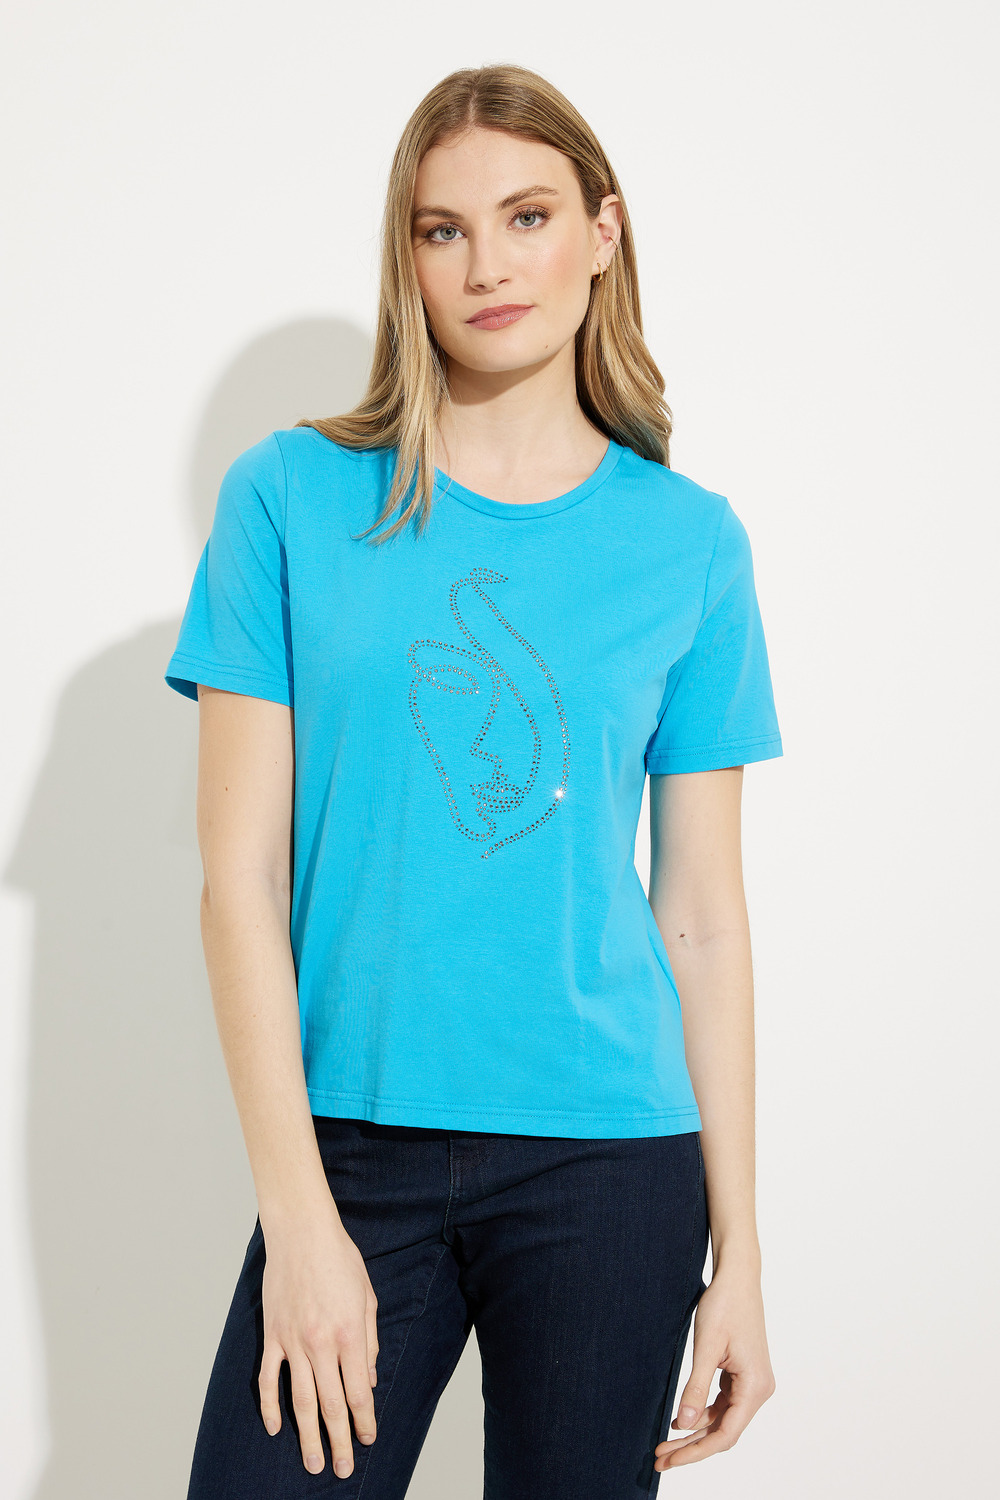 Rhinestone Front T-Shirt Style EW30003. Turquoise